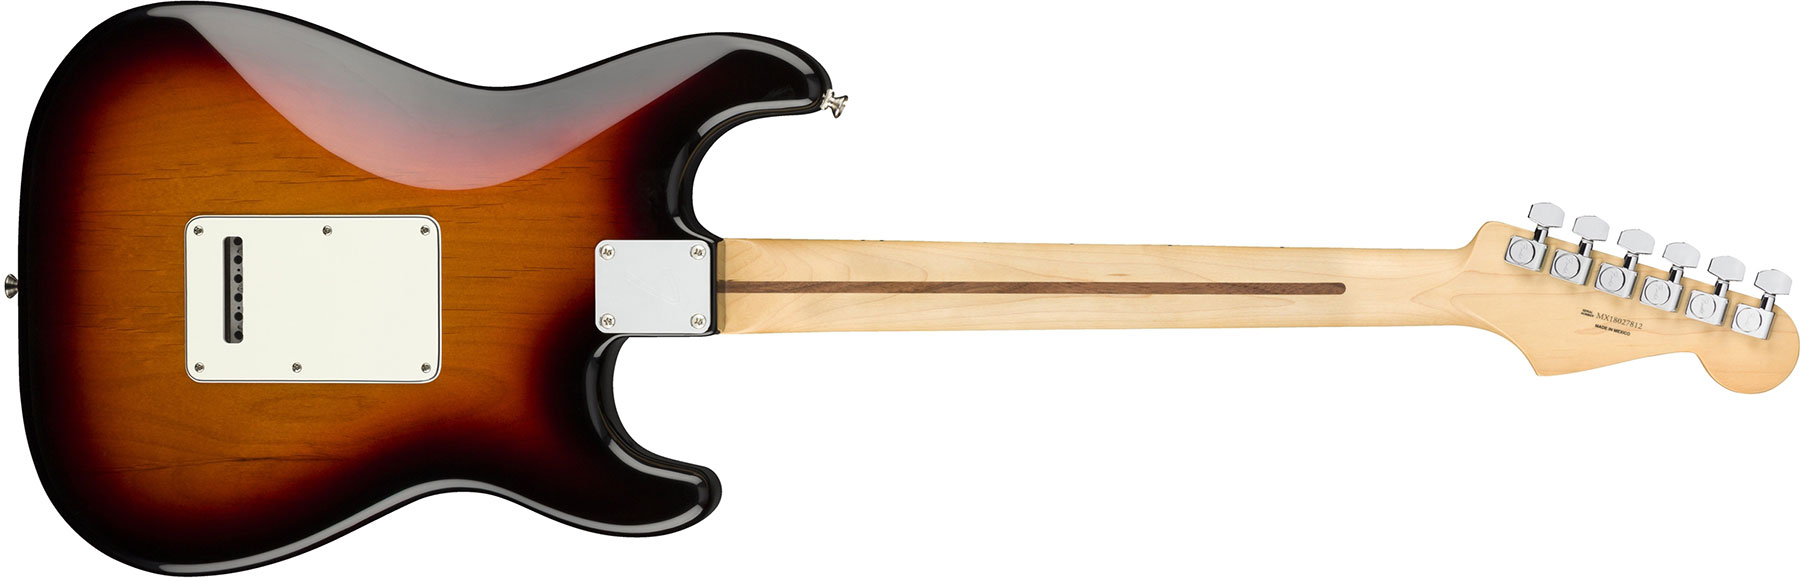 Fender Strat Player Lh Gaucher Mex Sss Mn - 3-color Sunburst - Guitare Électrique Gaucher - Variation 4